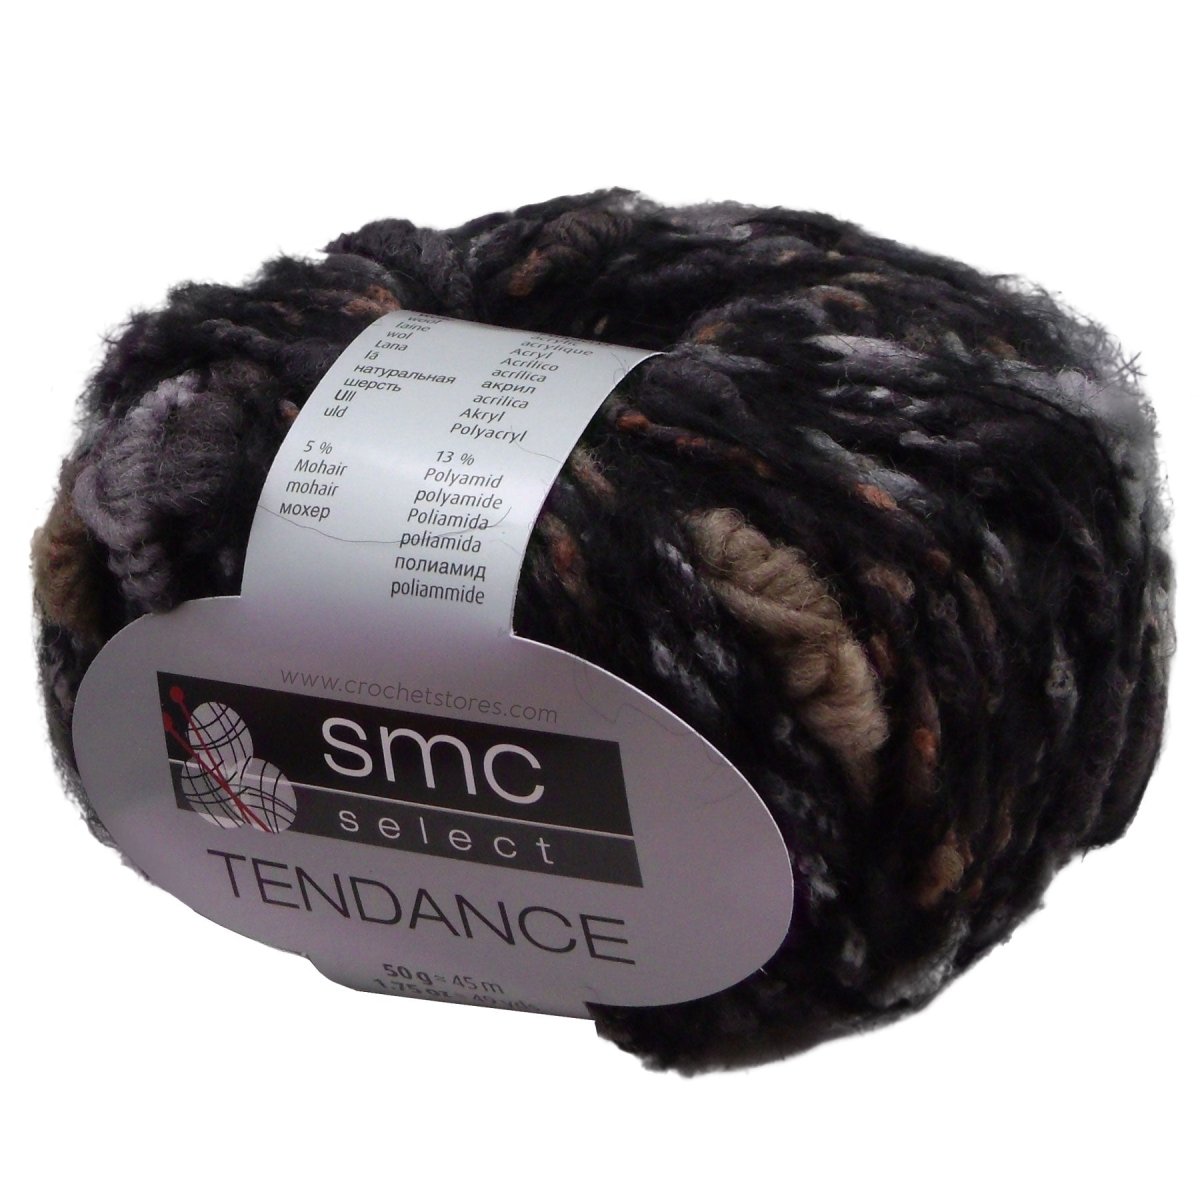 TENDANCE - Crochetstores9811763-83144082700933877